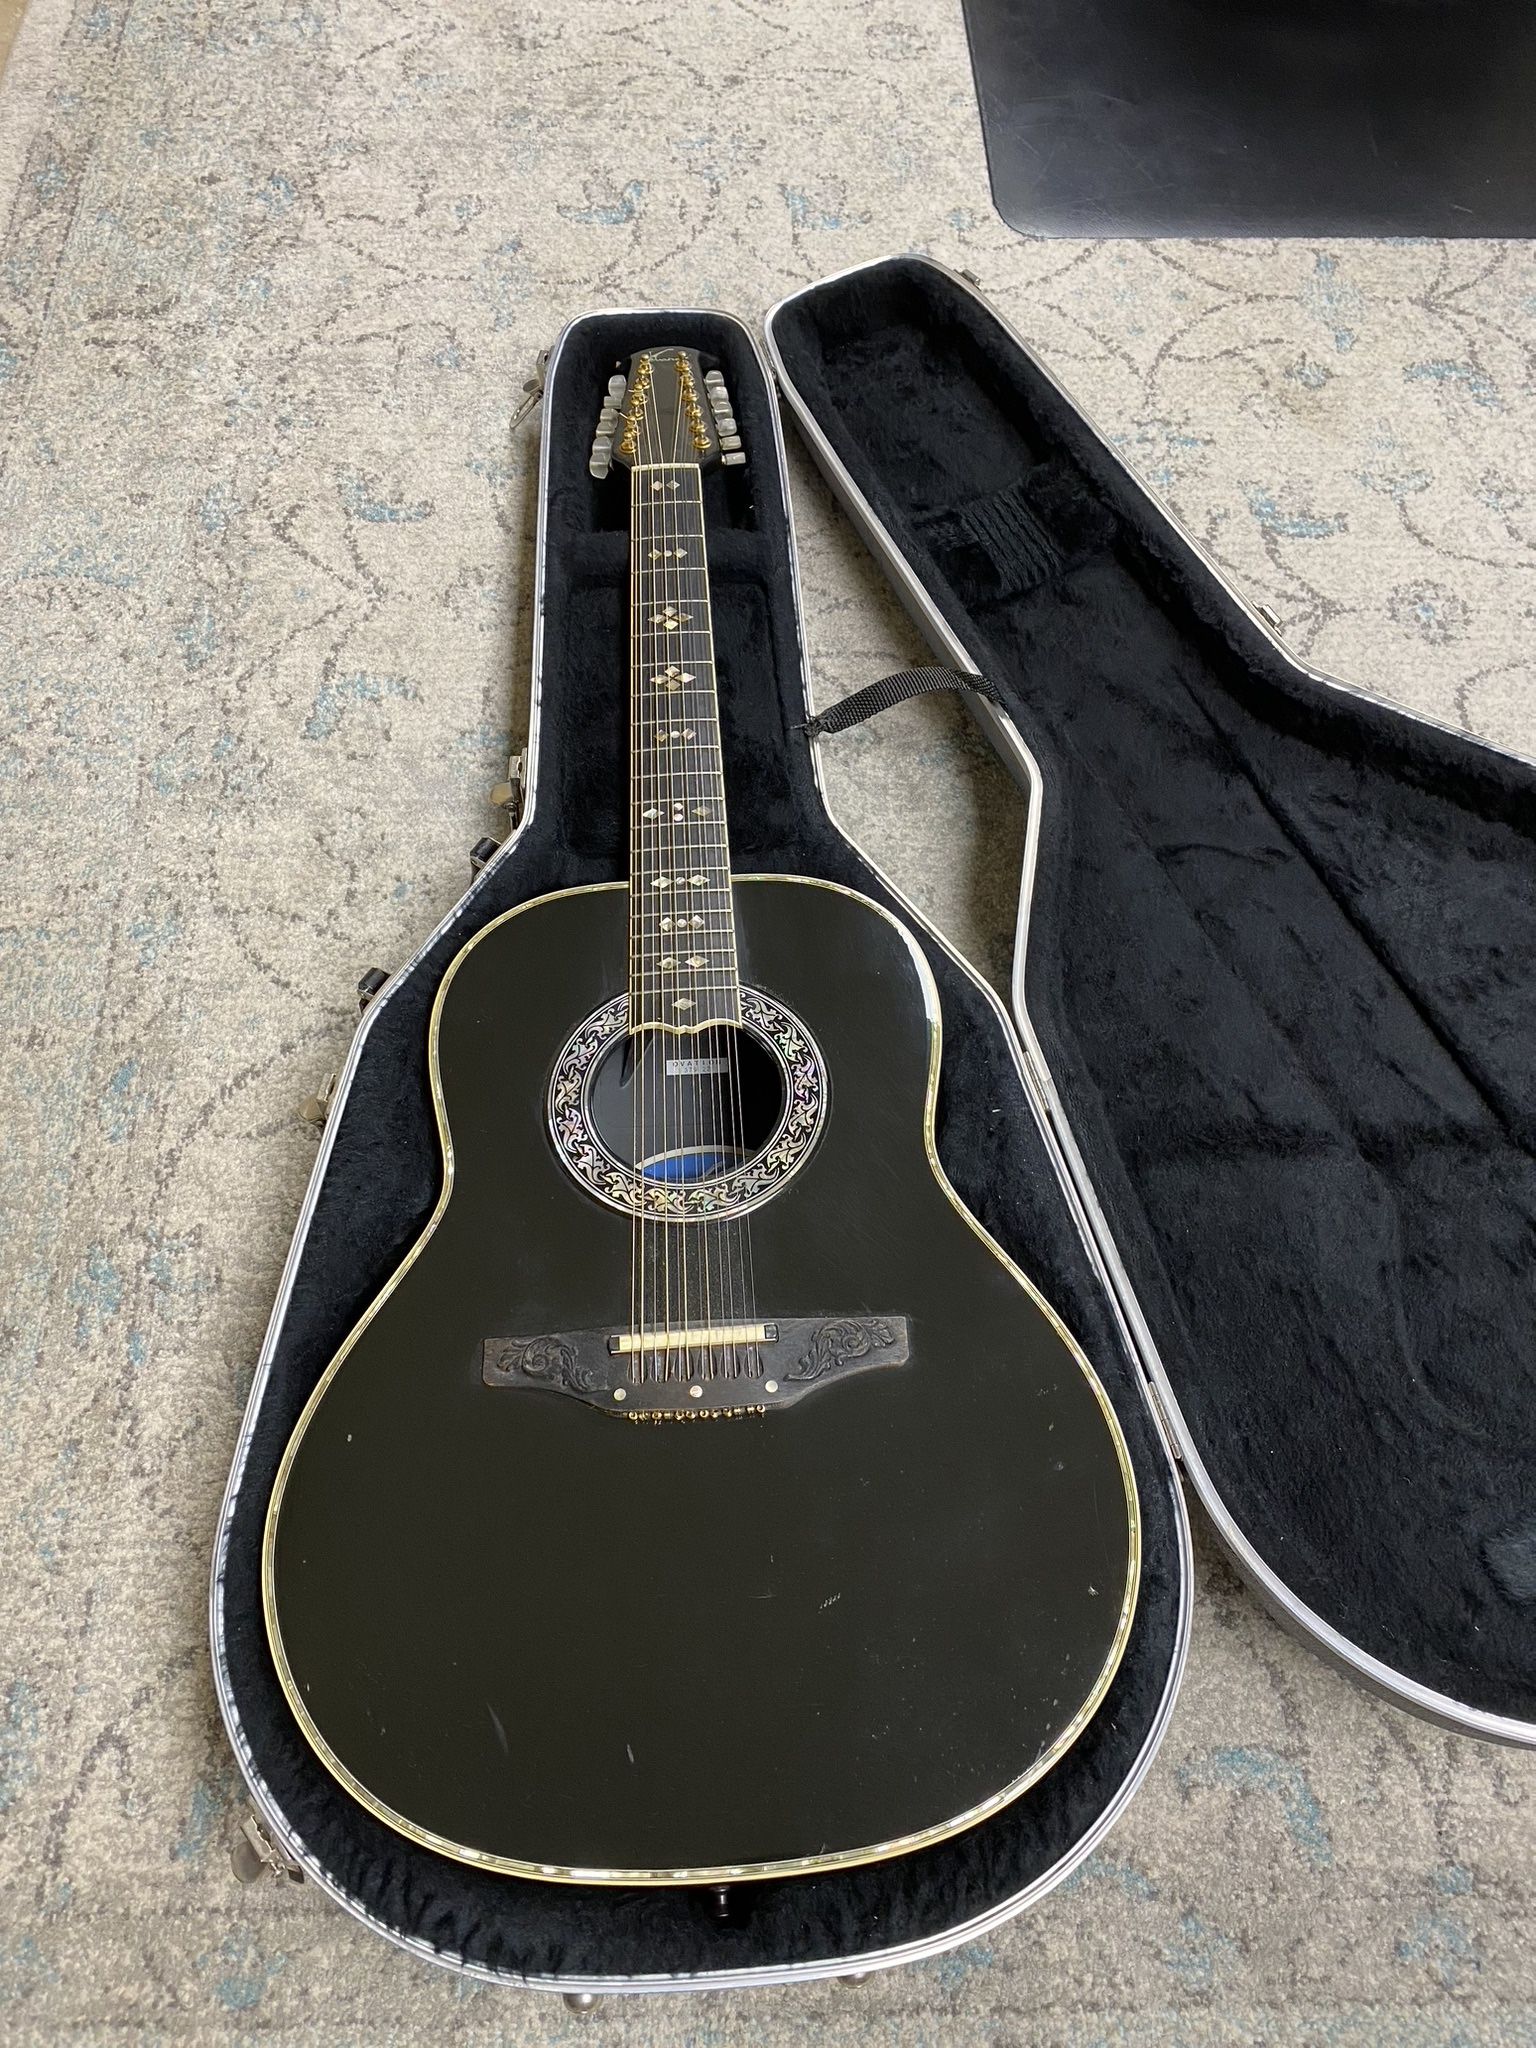 Ovation Guitar Model 1759 Custom Legend(Kaman Music) Best Offer In The Next 3 Days! 